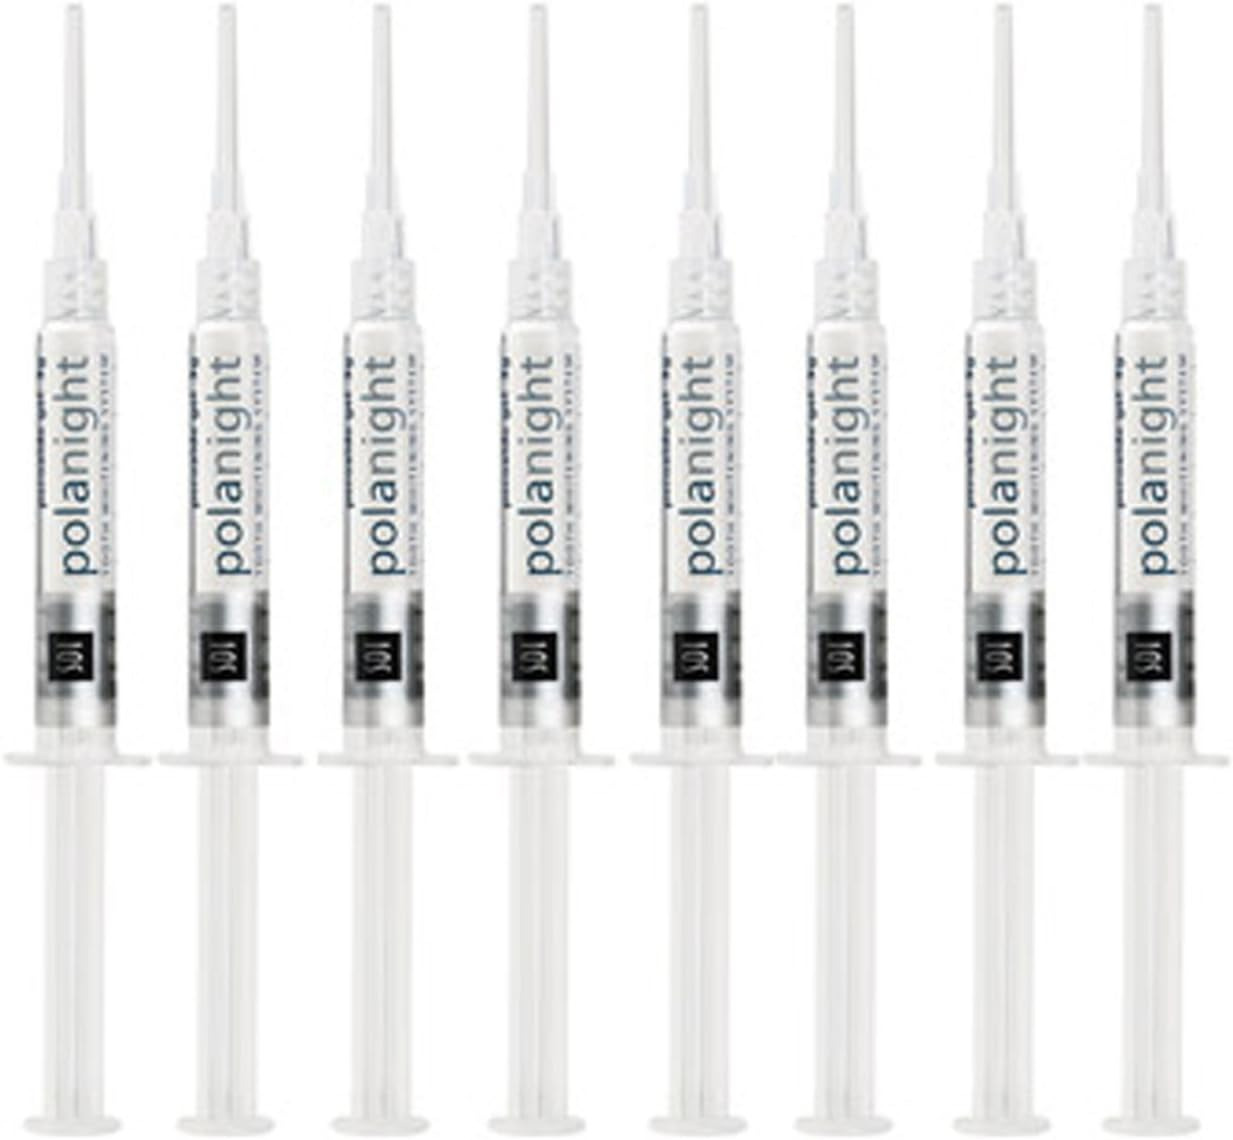 Whitening oral care Polanight 22% 8 Syringe Pack